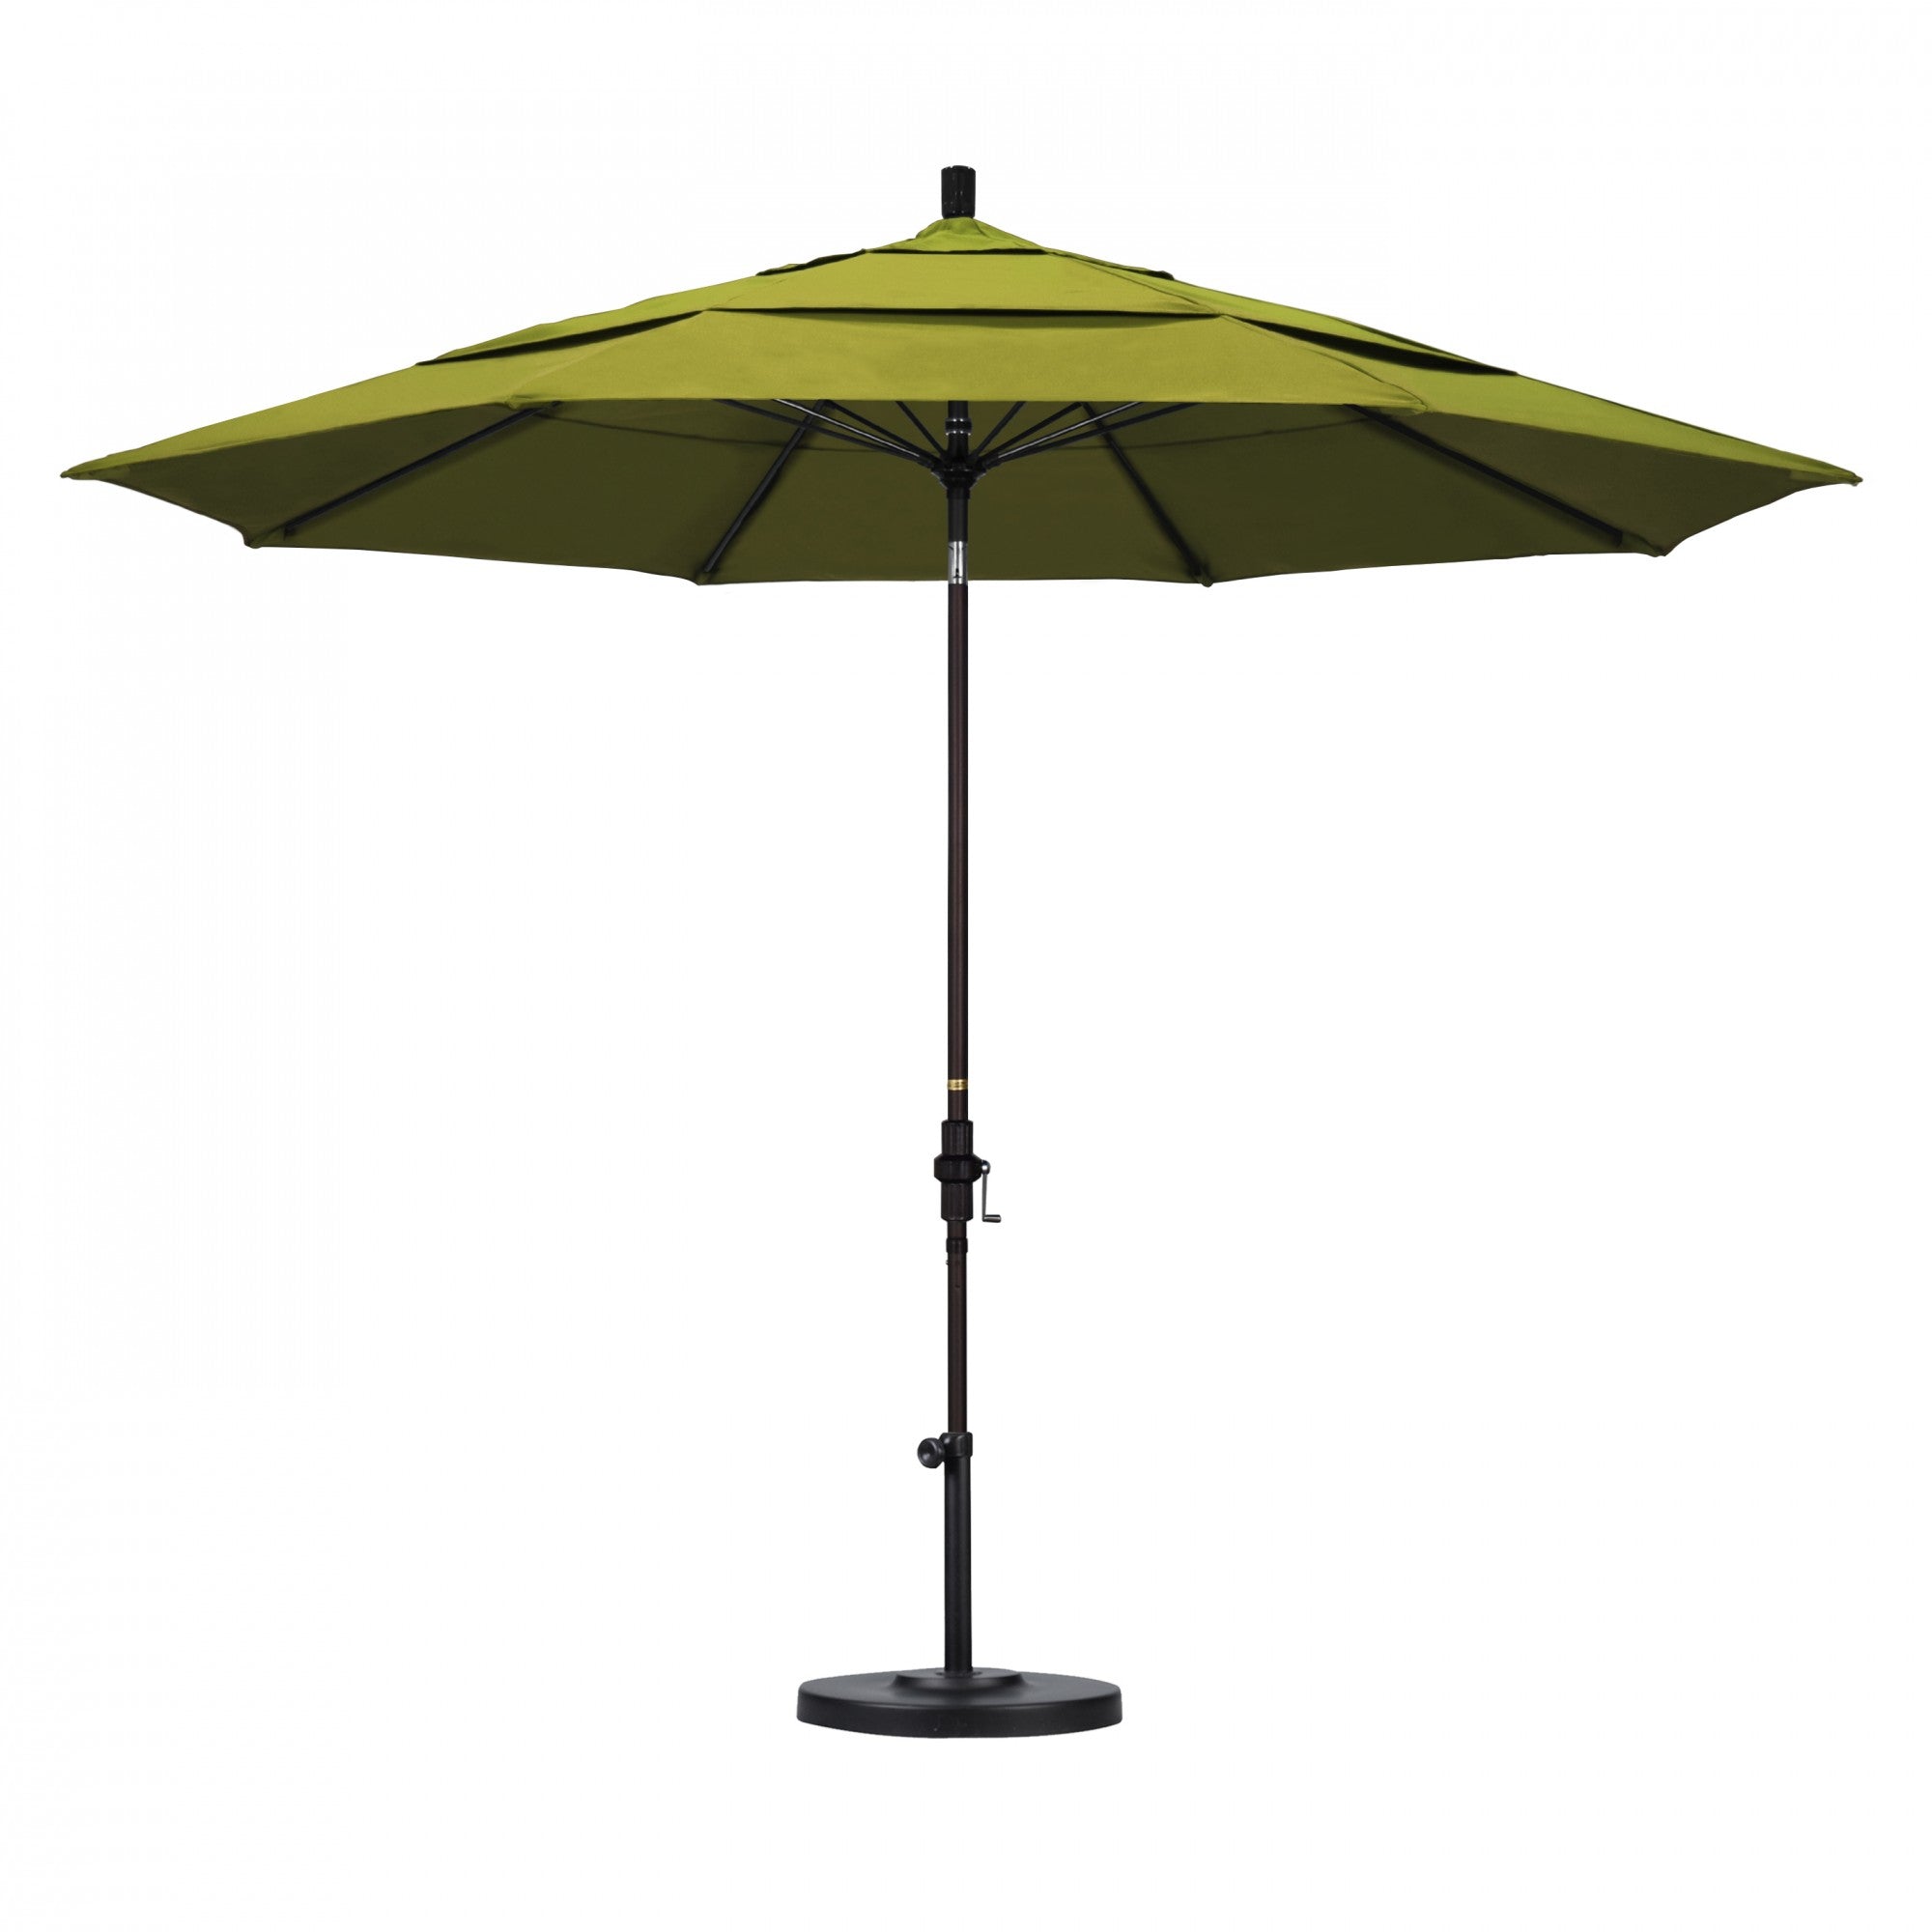 California Umbrella - 11' - Patio Umbrella Umbrella - Aluminum Pole - Kiwi - Olefin - GSCUF118117-F55-DWV